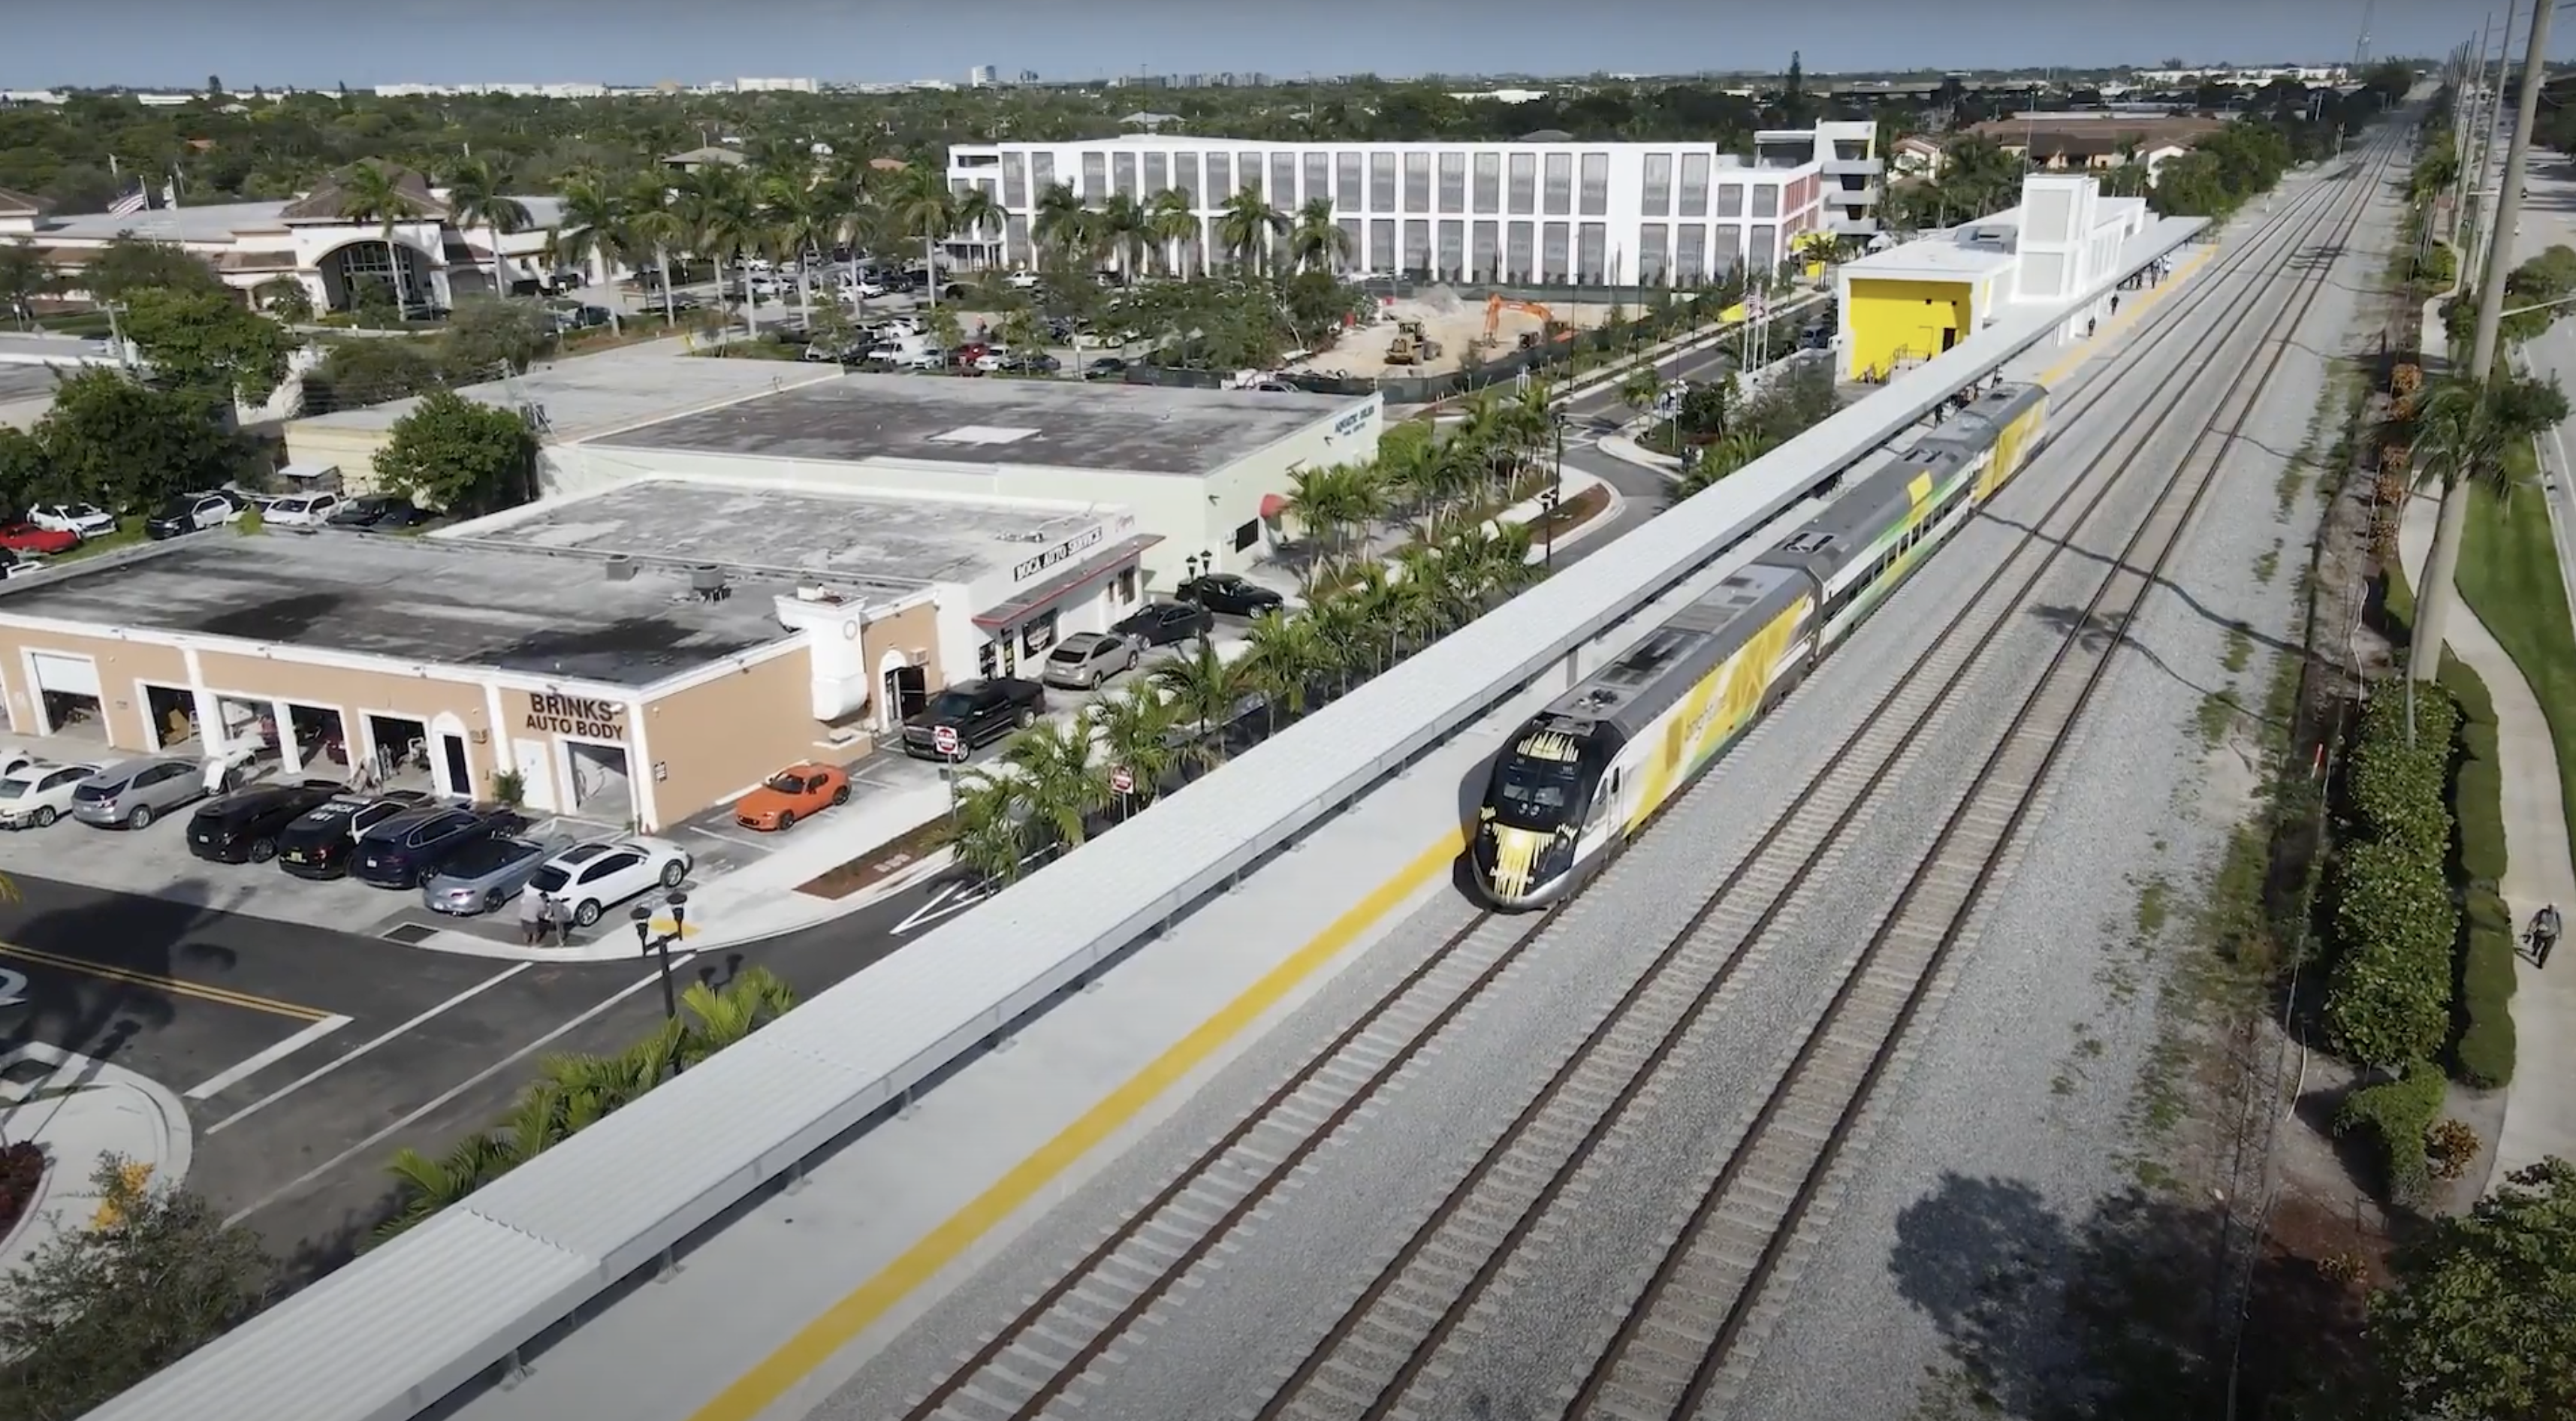 Boca Raton Train Station: High-Speed Rail